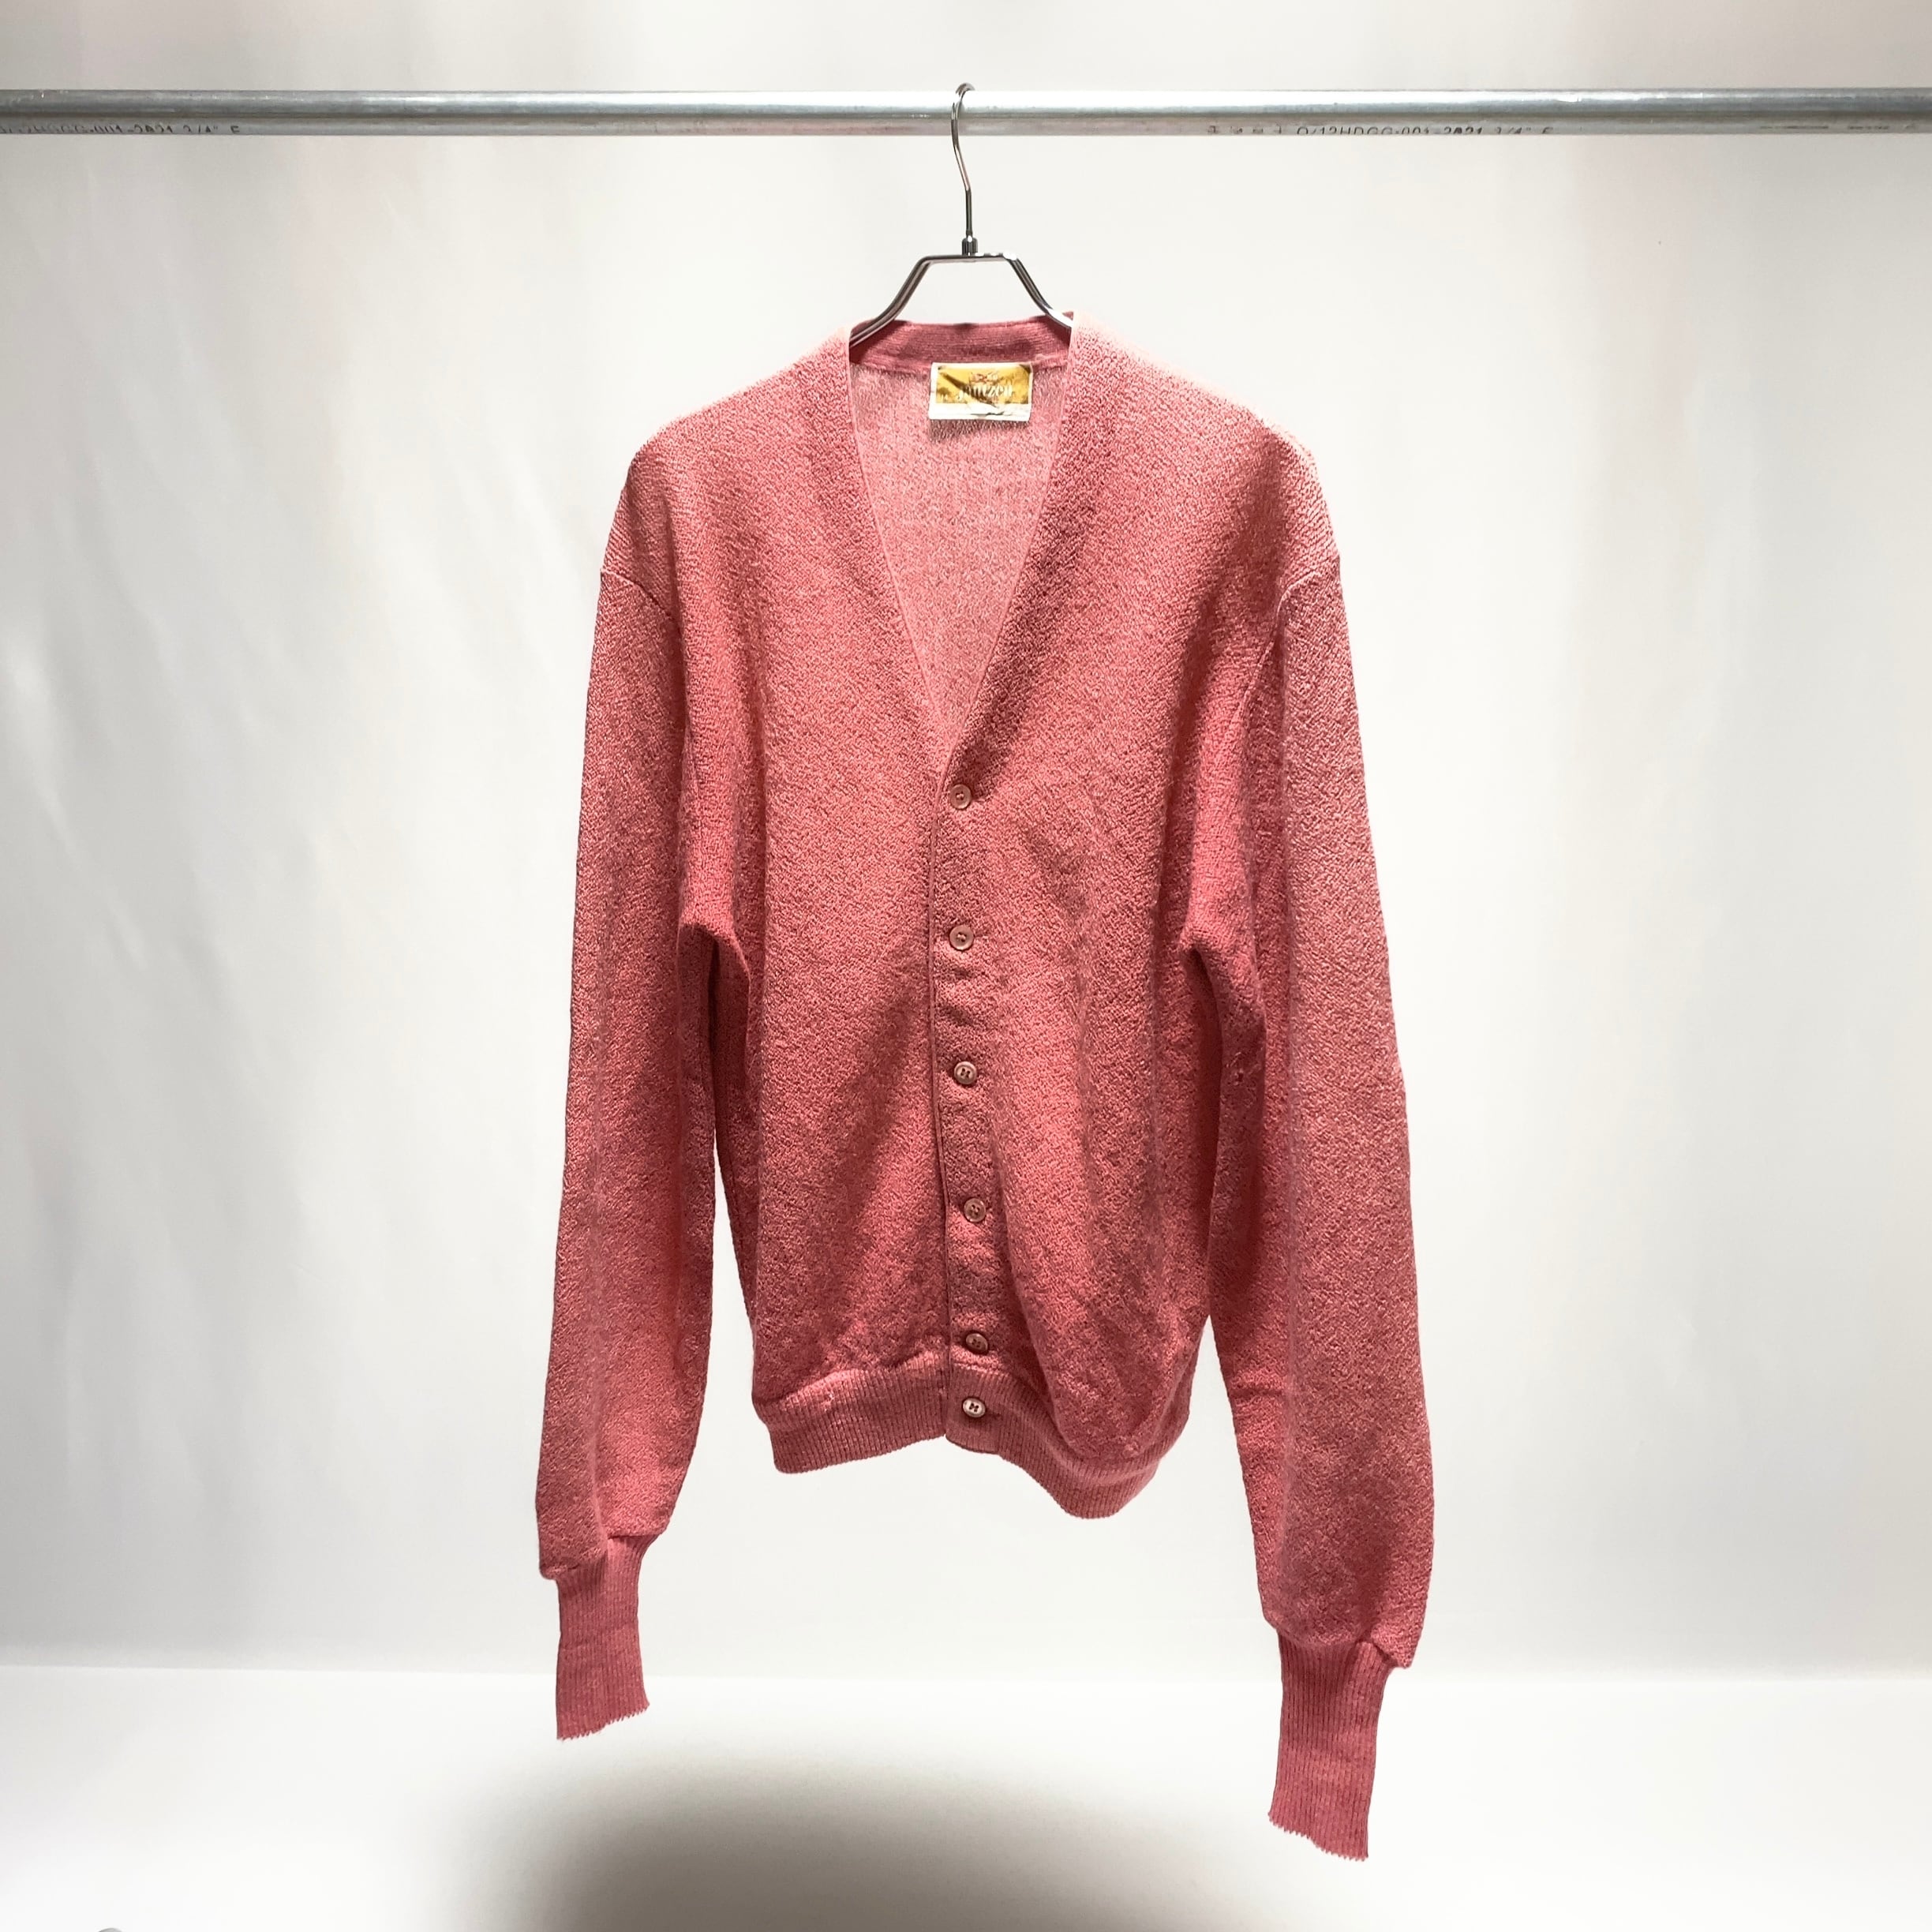 Jantzen / 60-70's Vintage Pink Color Knit Cardigan / Made in USA  /ジャンセン/カーディガン/ピンクカラー/ヴィンテージ/パール編み/アメリカ製/60年代/70年代/